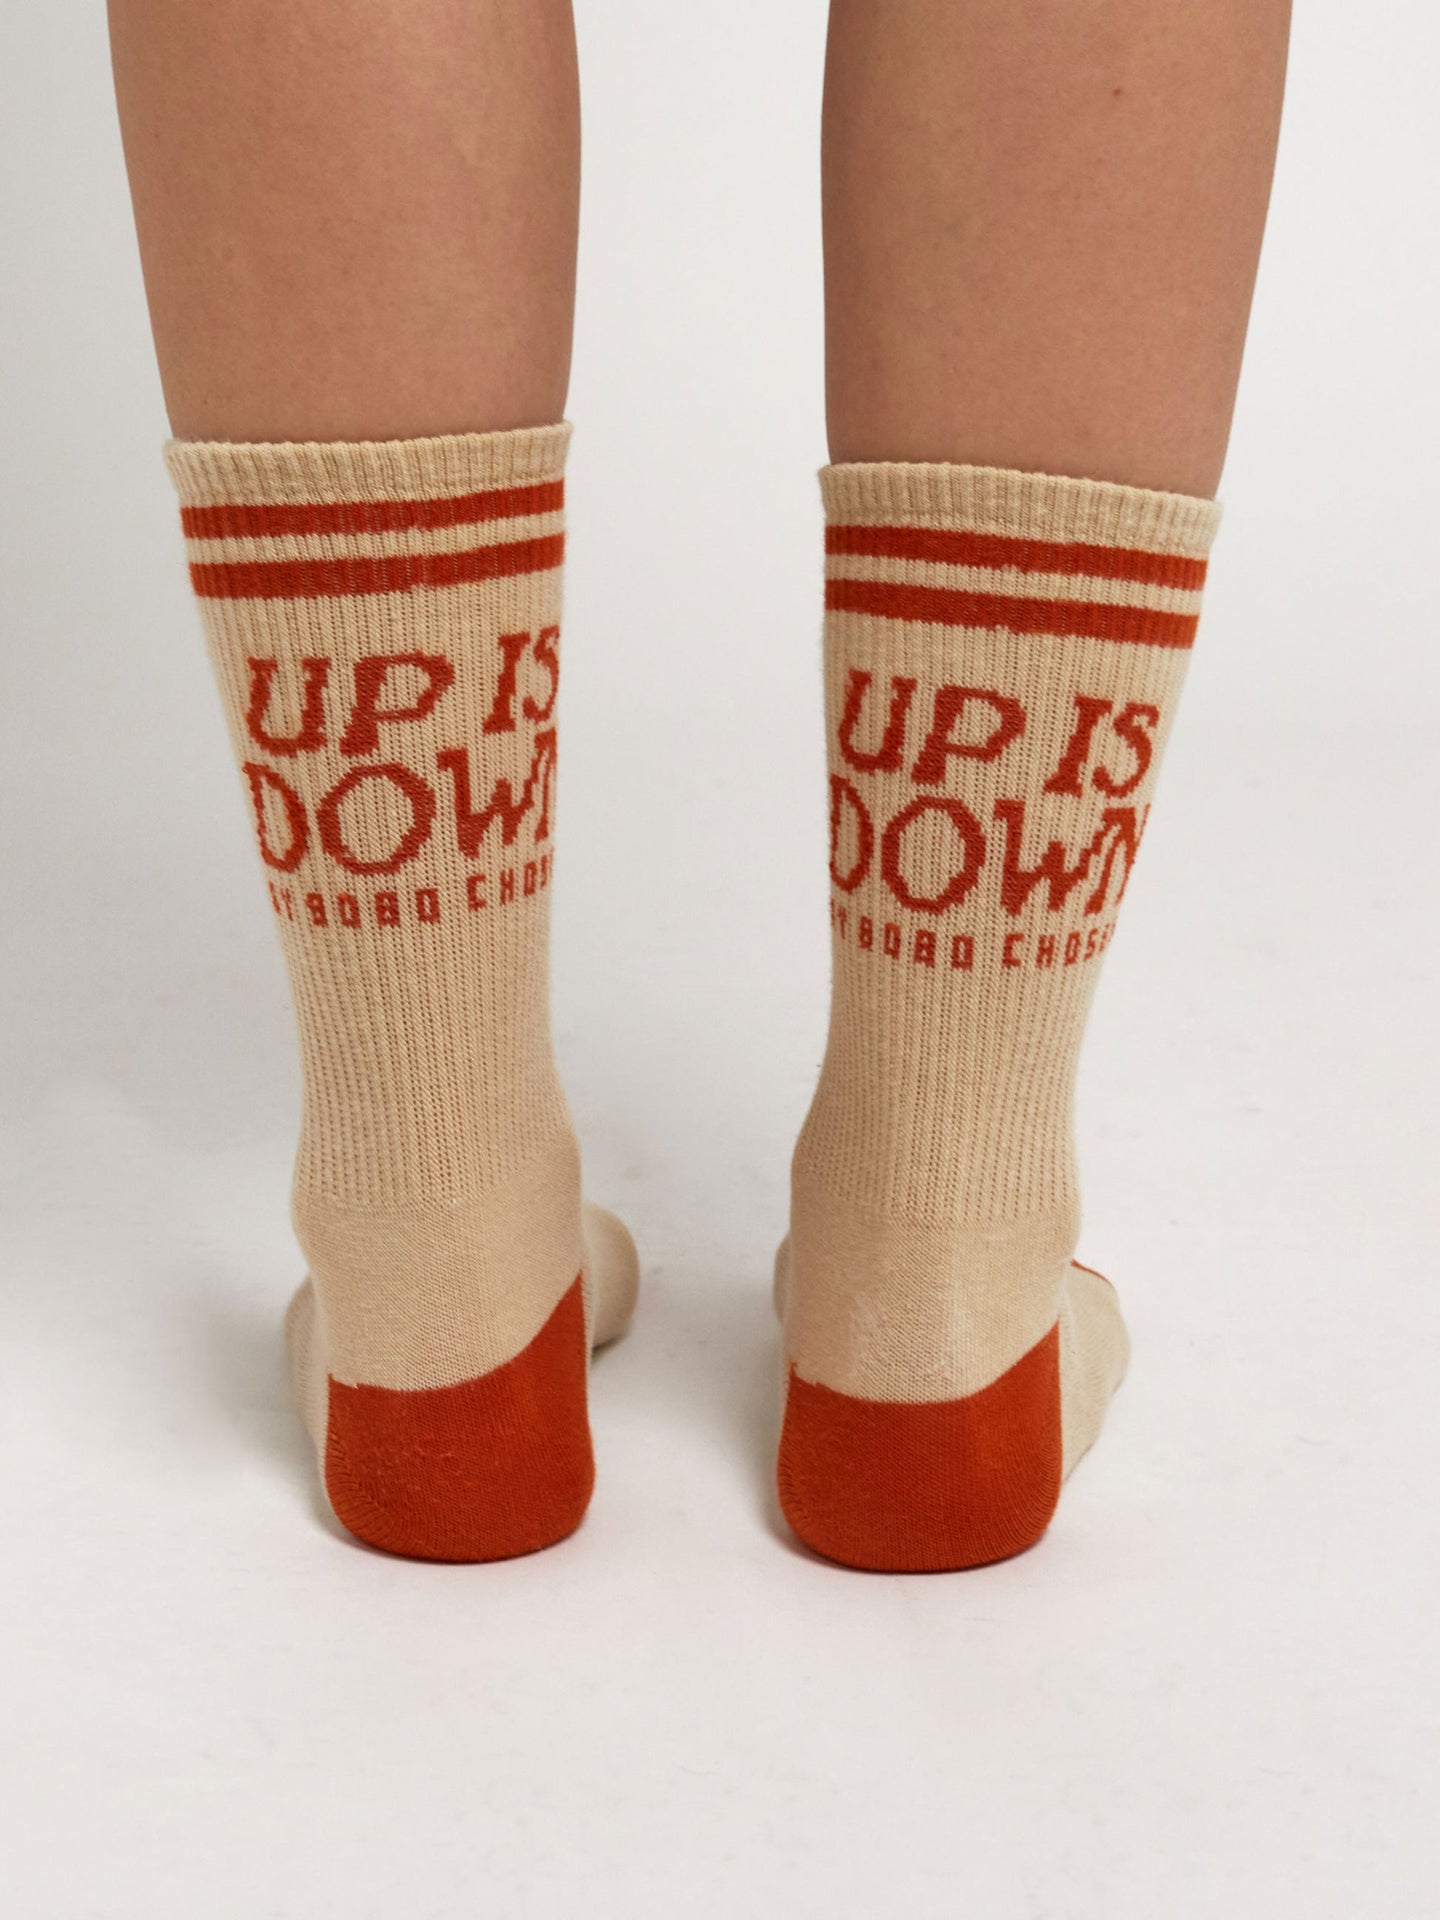 Socks Up Is Down 223ak023 200